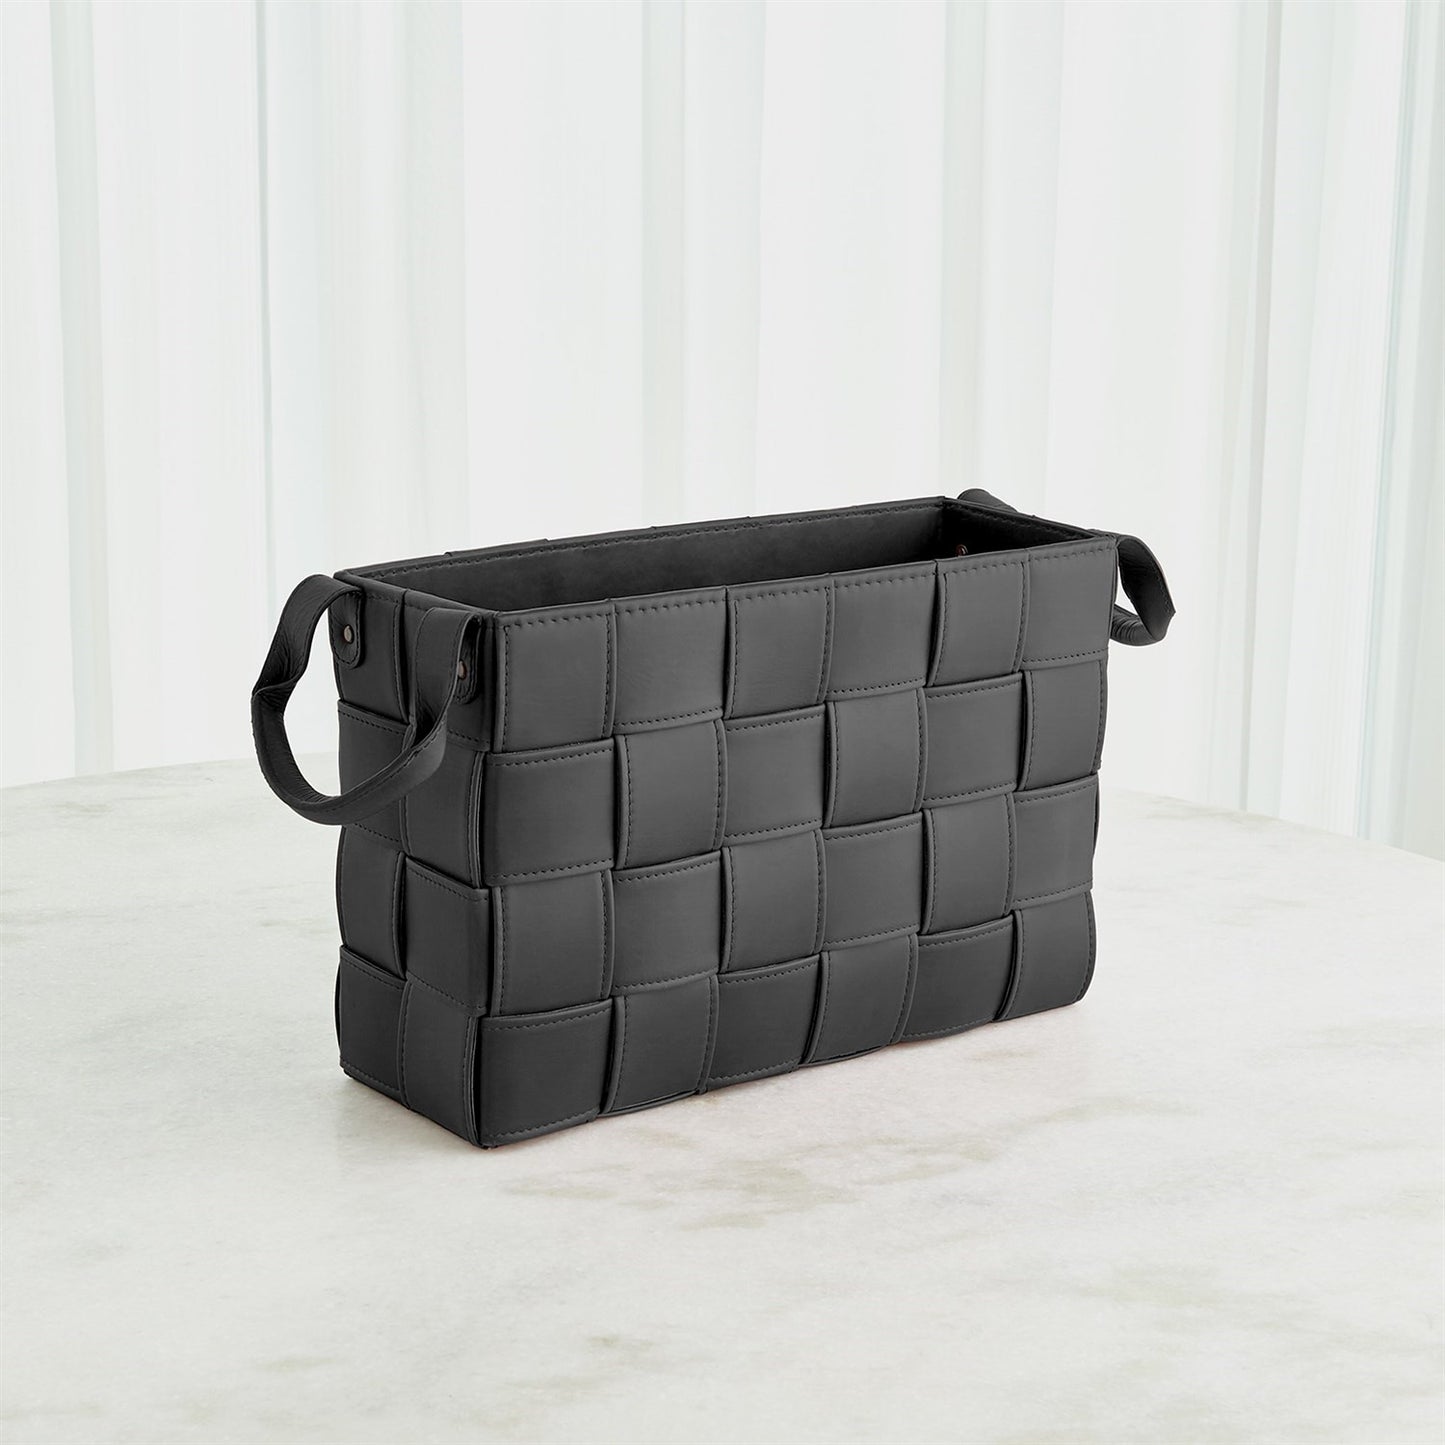 Soft Woven Leather Basket - Black - 2 sizes